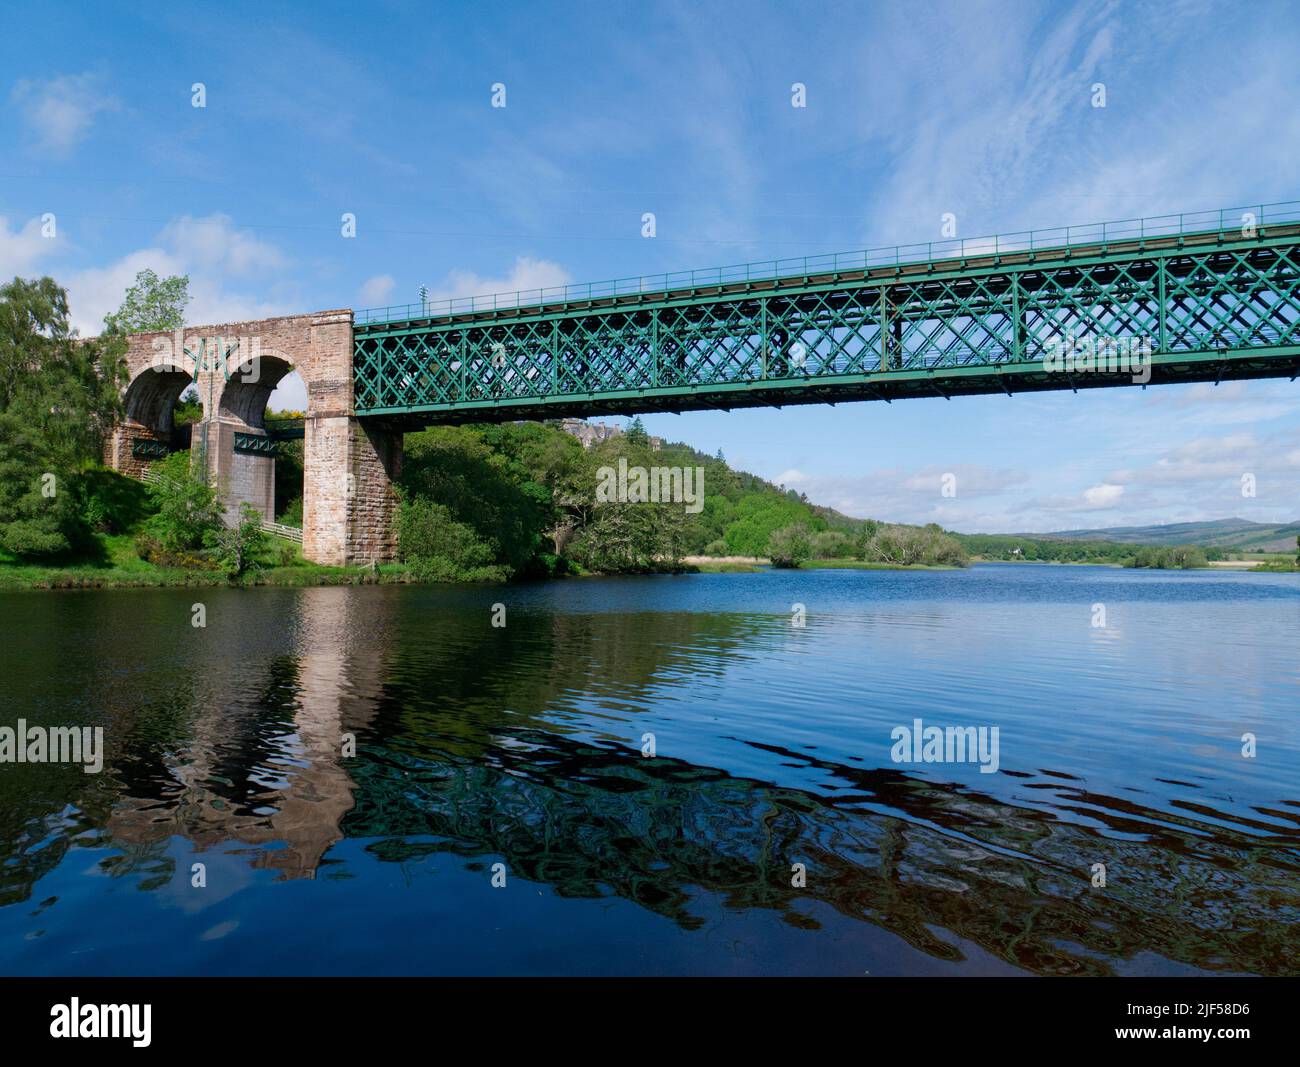 Shin railway viaduct over Kyle of Sutherland, Highland Scotland Stock Photo